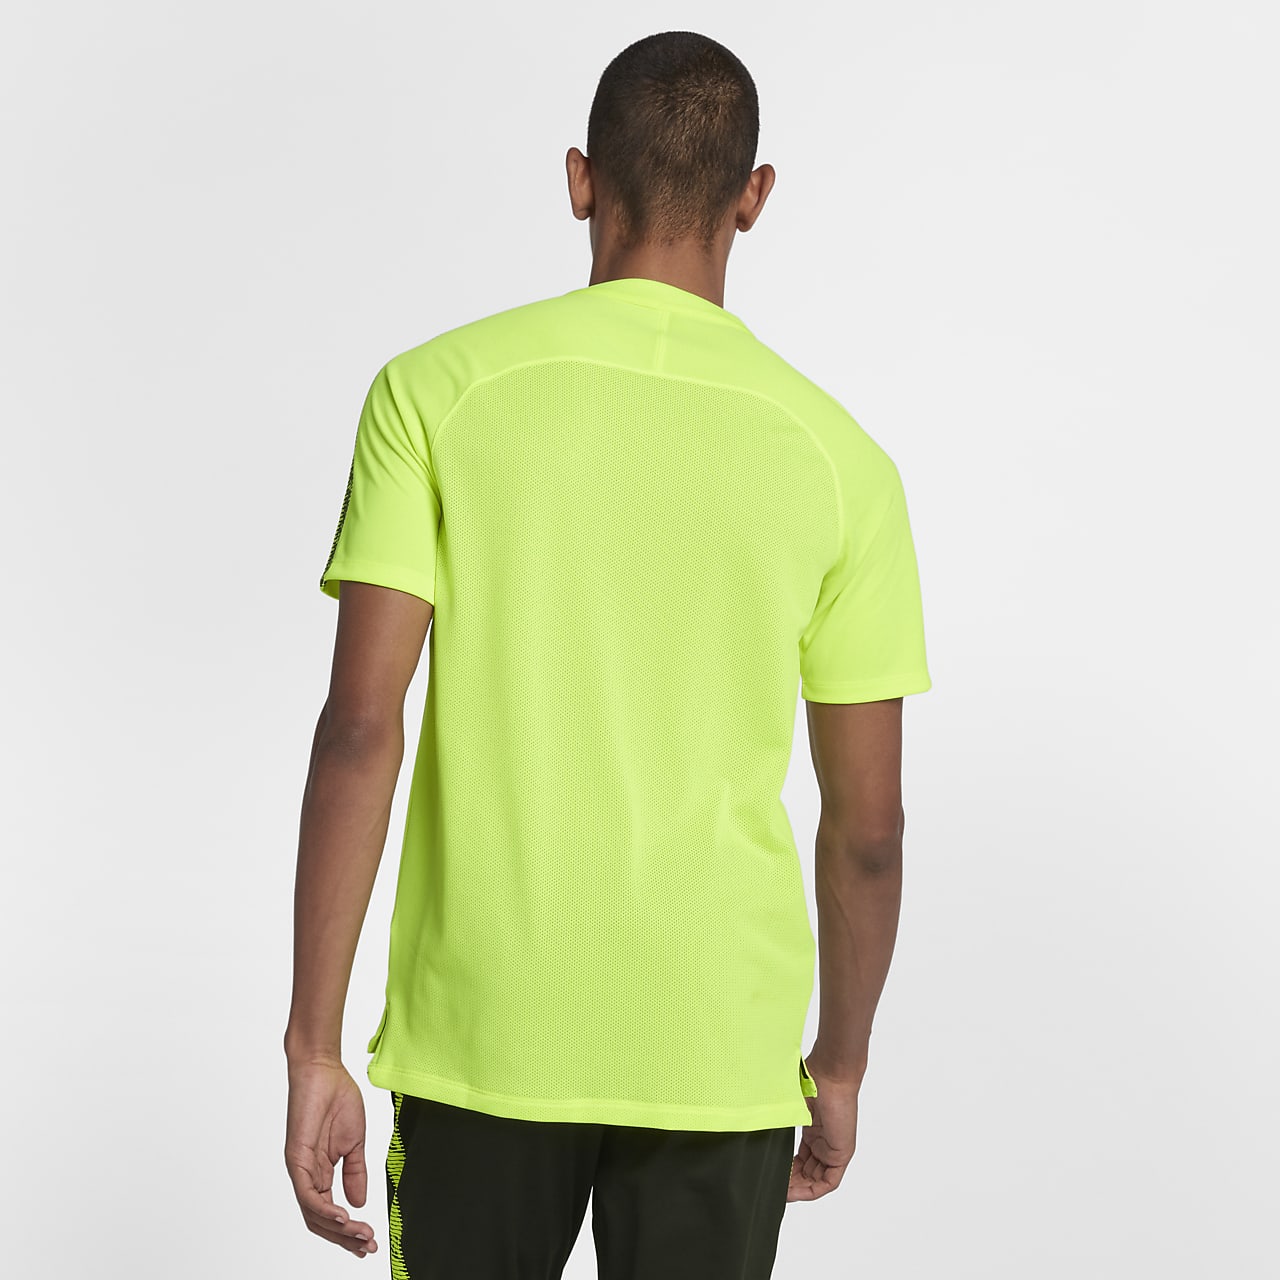 stil synoniemenlijst Rijp Nike Breathe Squad Men's Short-Sleeve Football Top. Nike ID